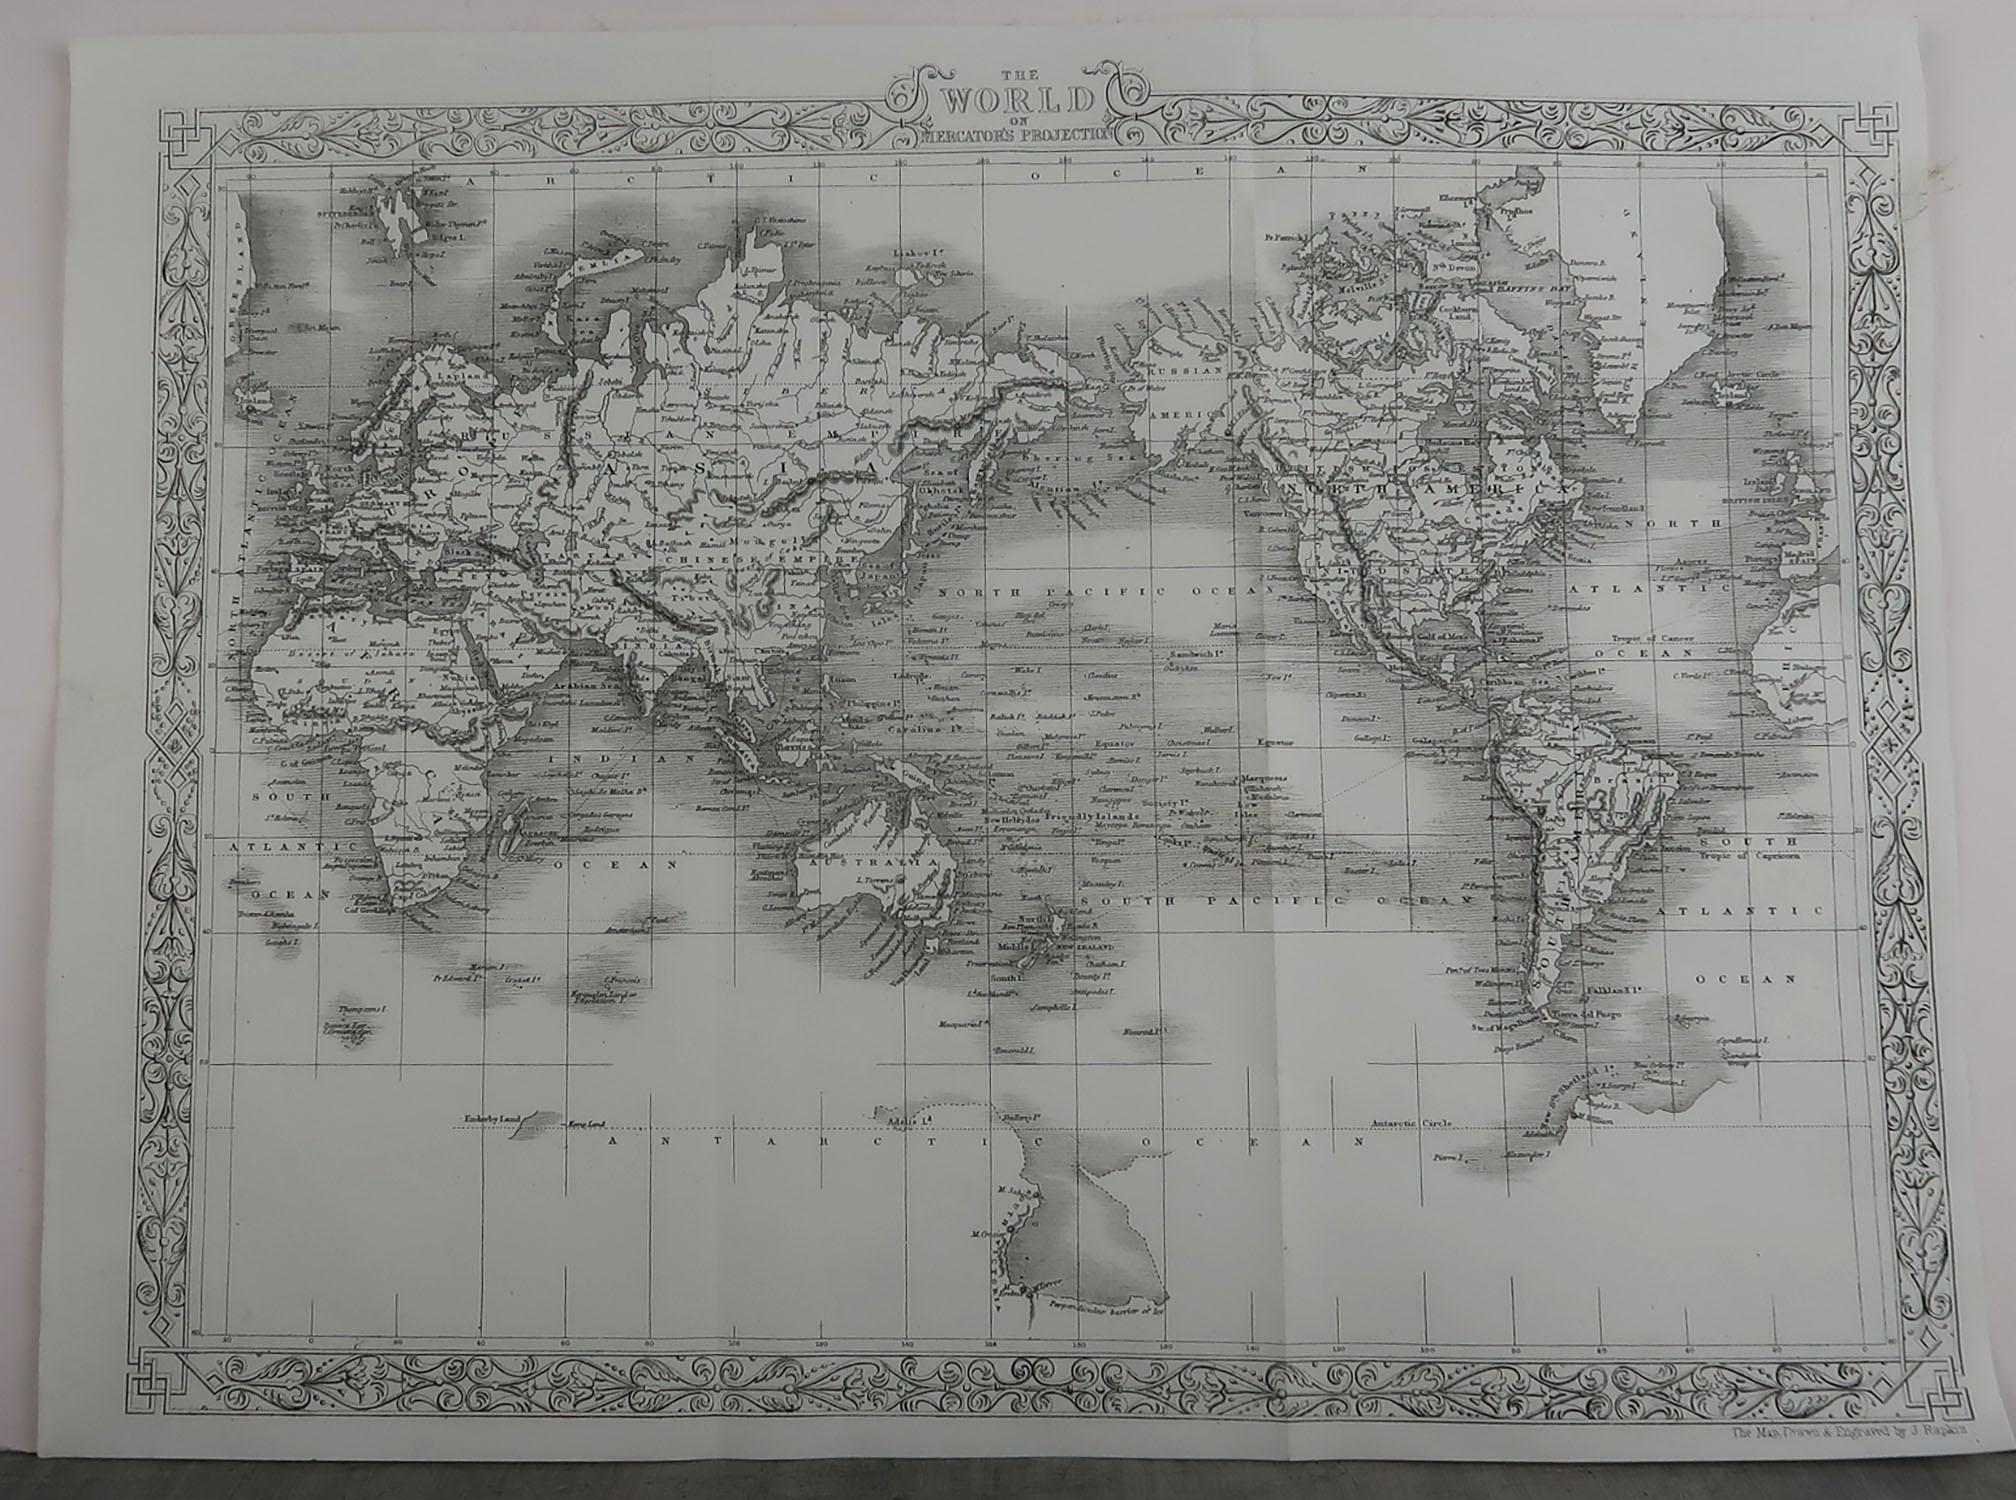 Other Original Antique Map of The World by John Rapkin, circa 1850